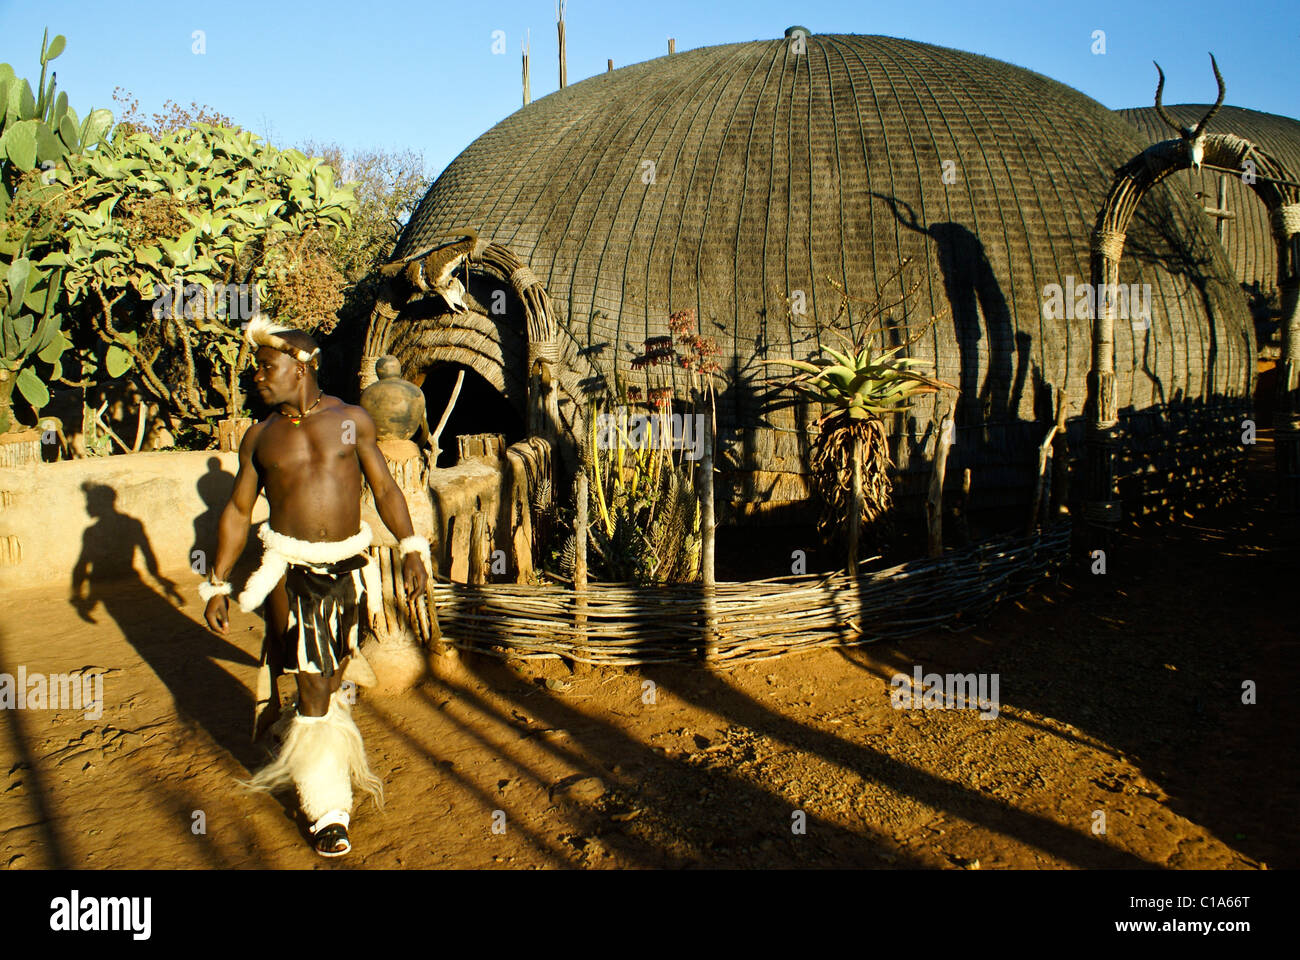 Zulu warrior e sangoma's house, Shakaland, Sud Africa Foto Stock